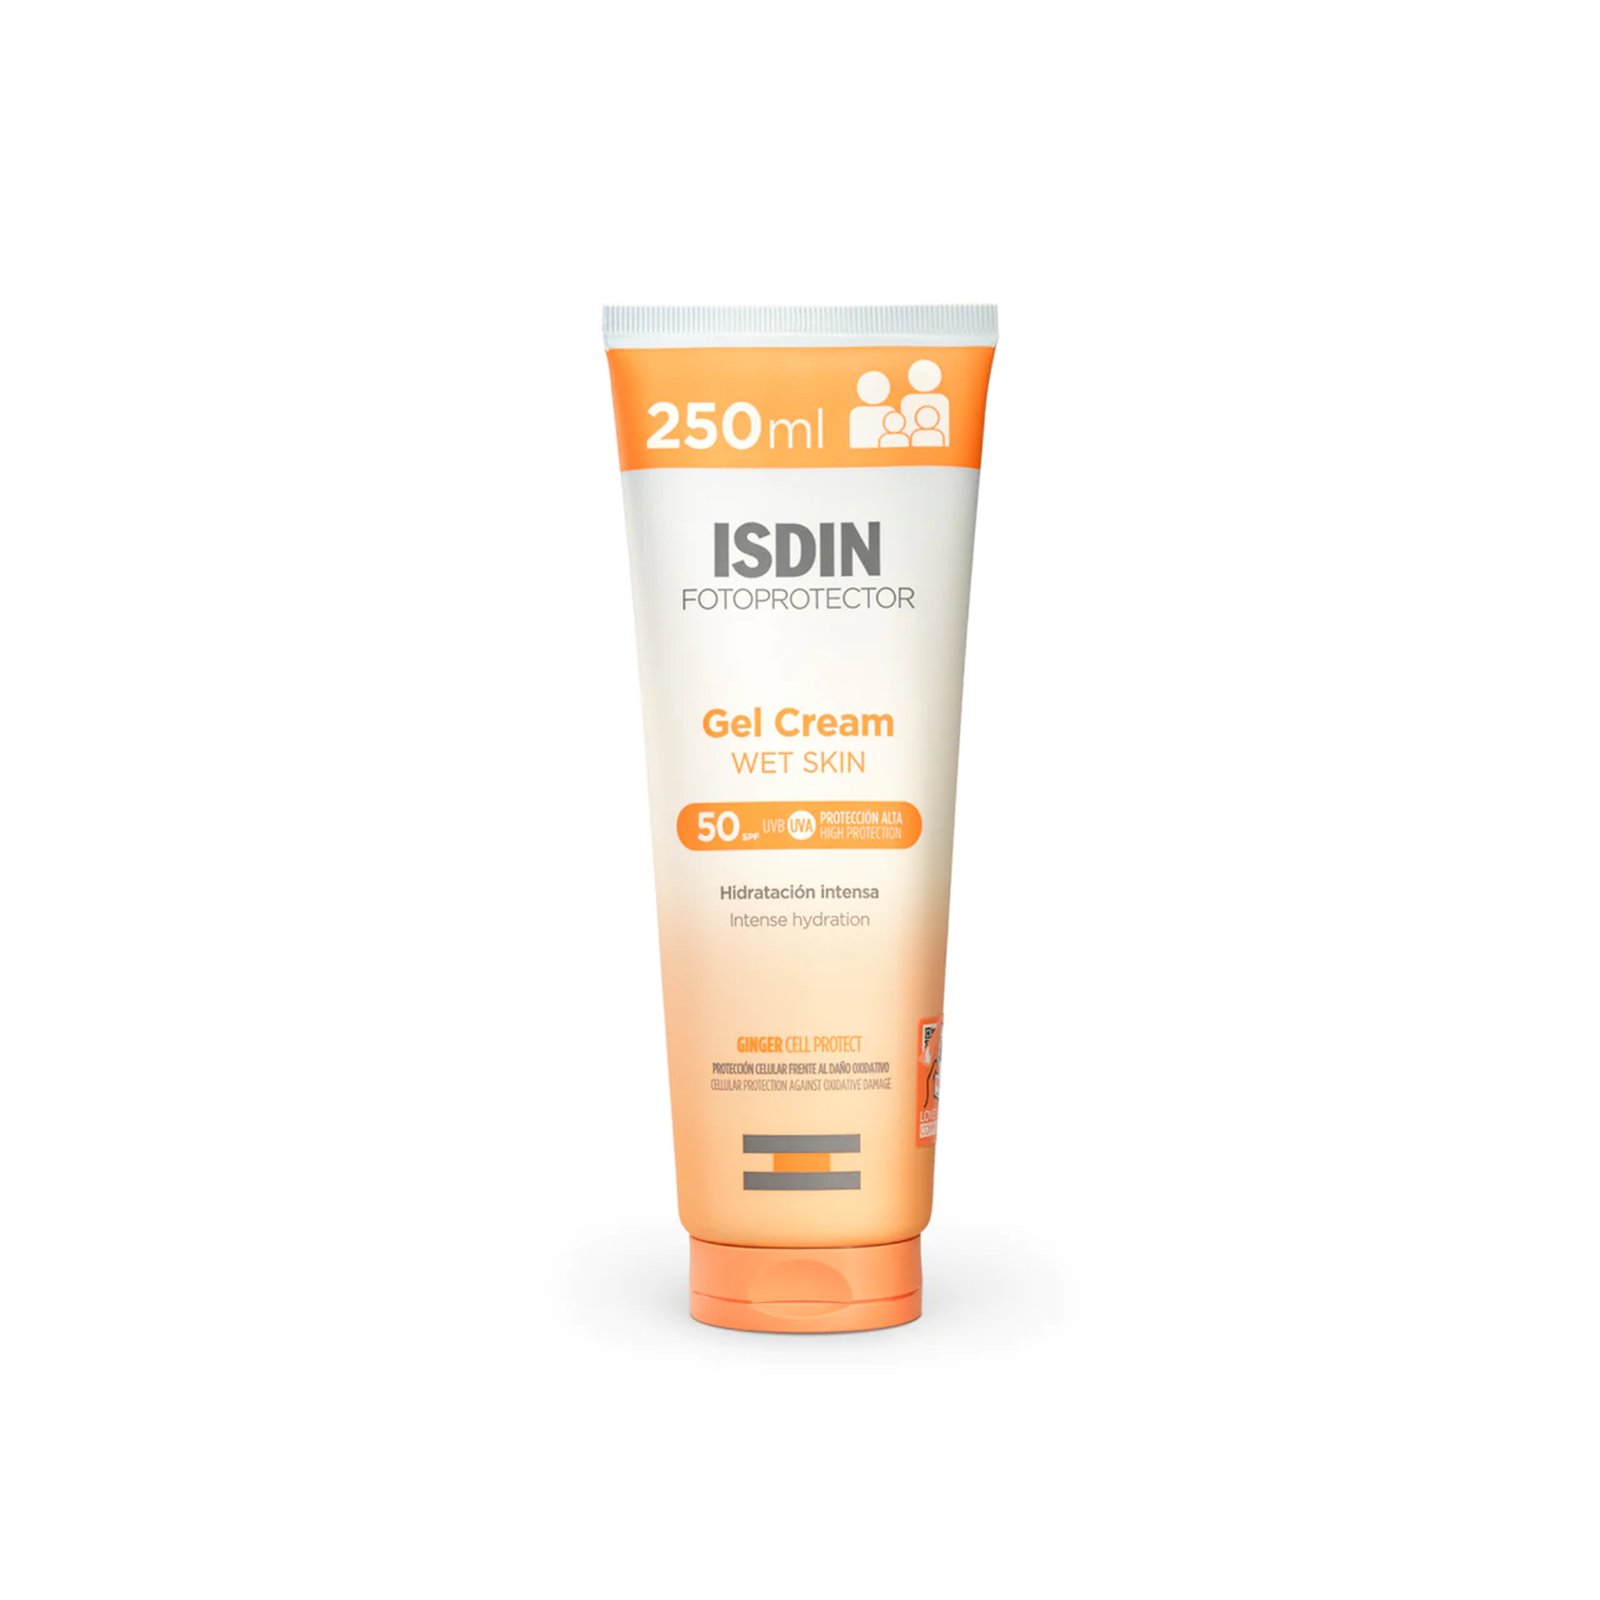 ISDIN Fotoprotector Gel Cream SPF50 250ml (8.45floz)